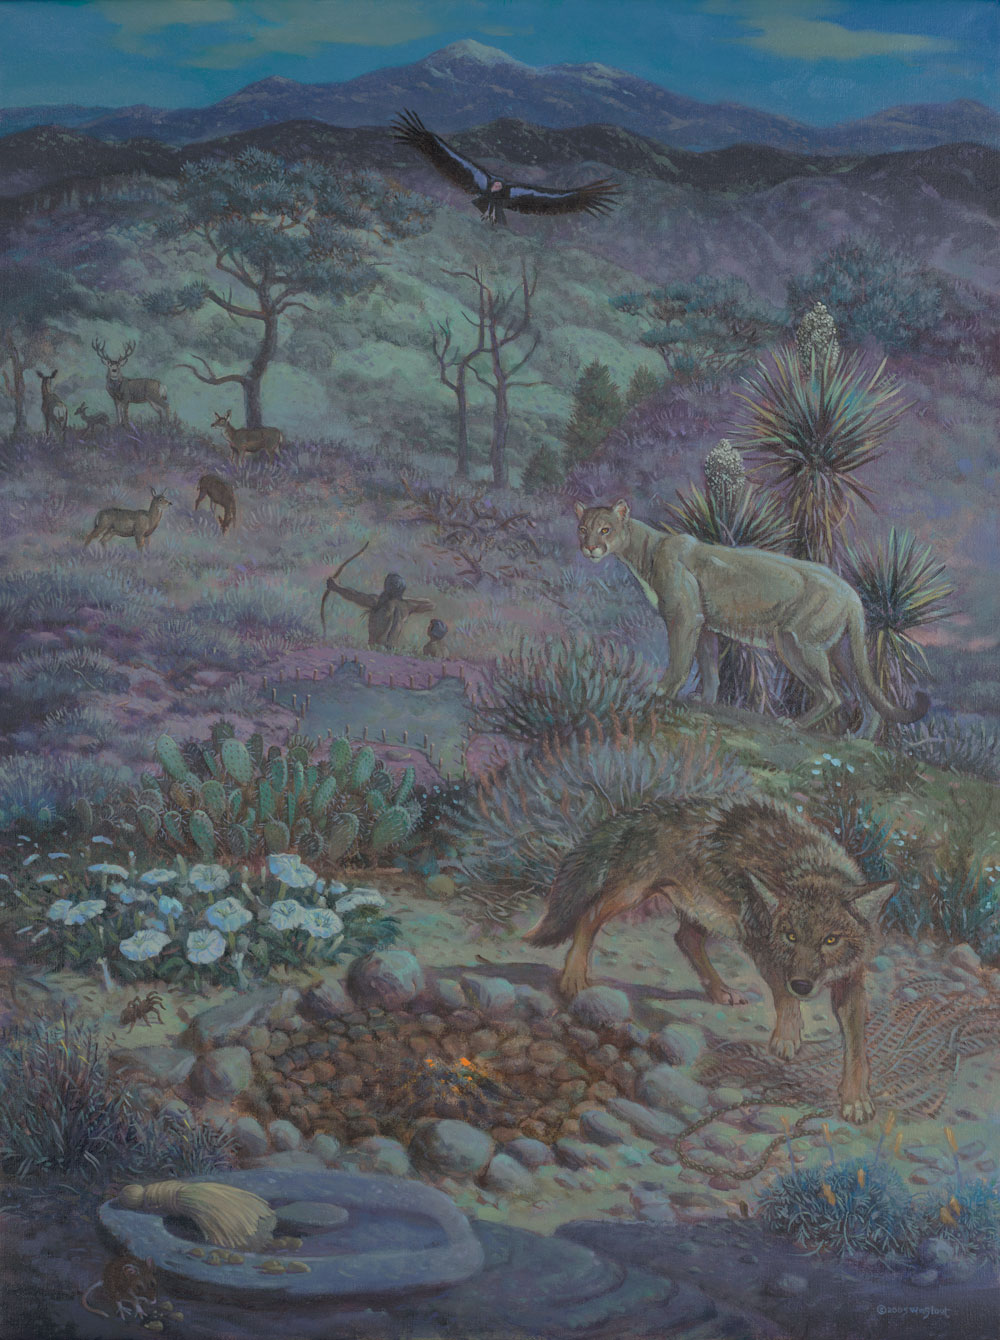 Cautious Coyote: Quarter Scale painting (Trilon: San Diego Dusk 2000 years ago), William Stout